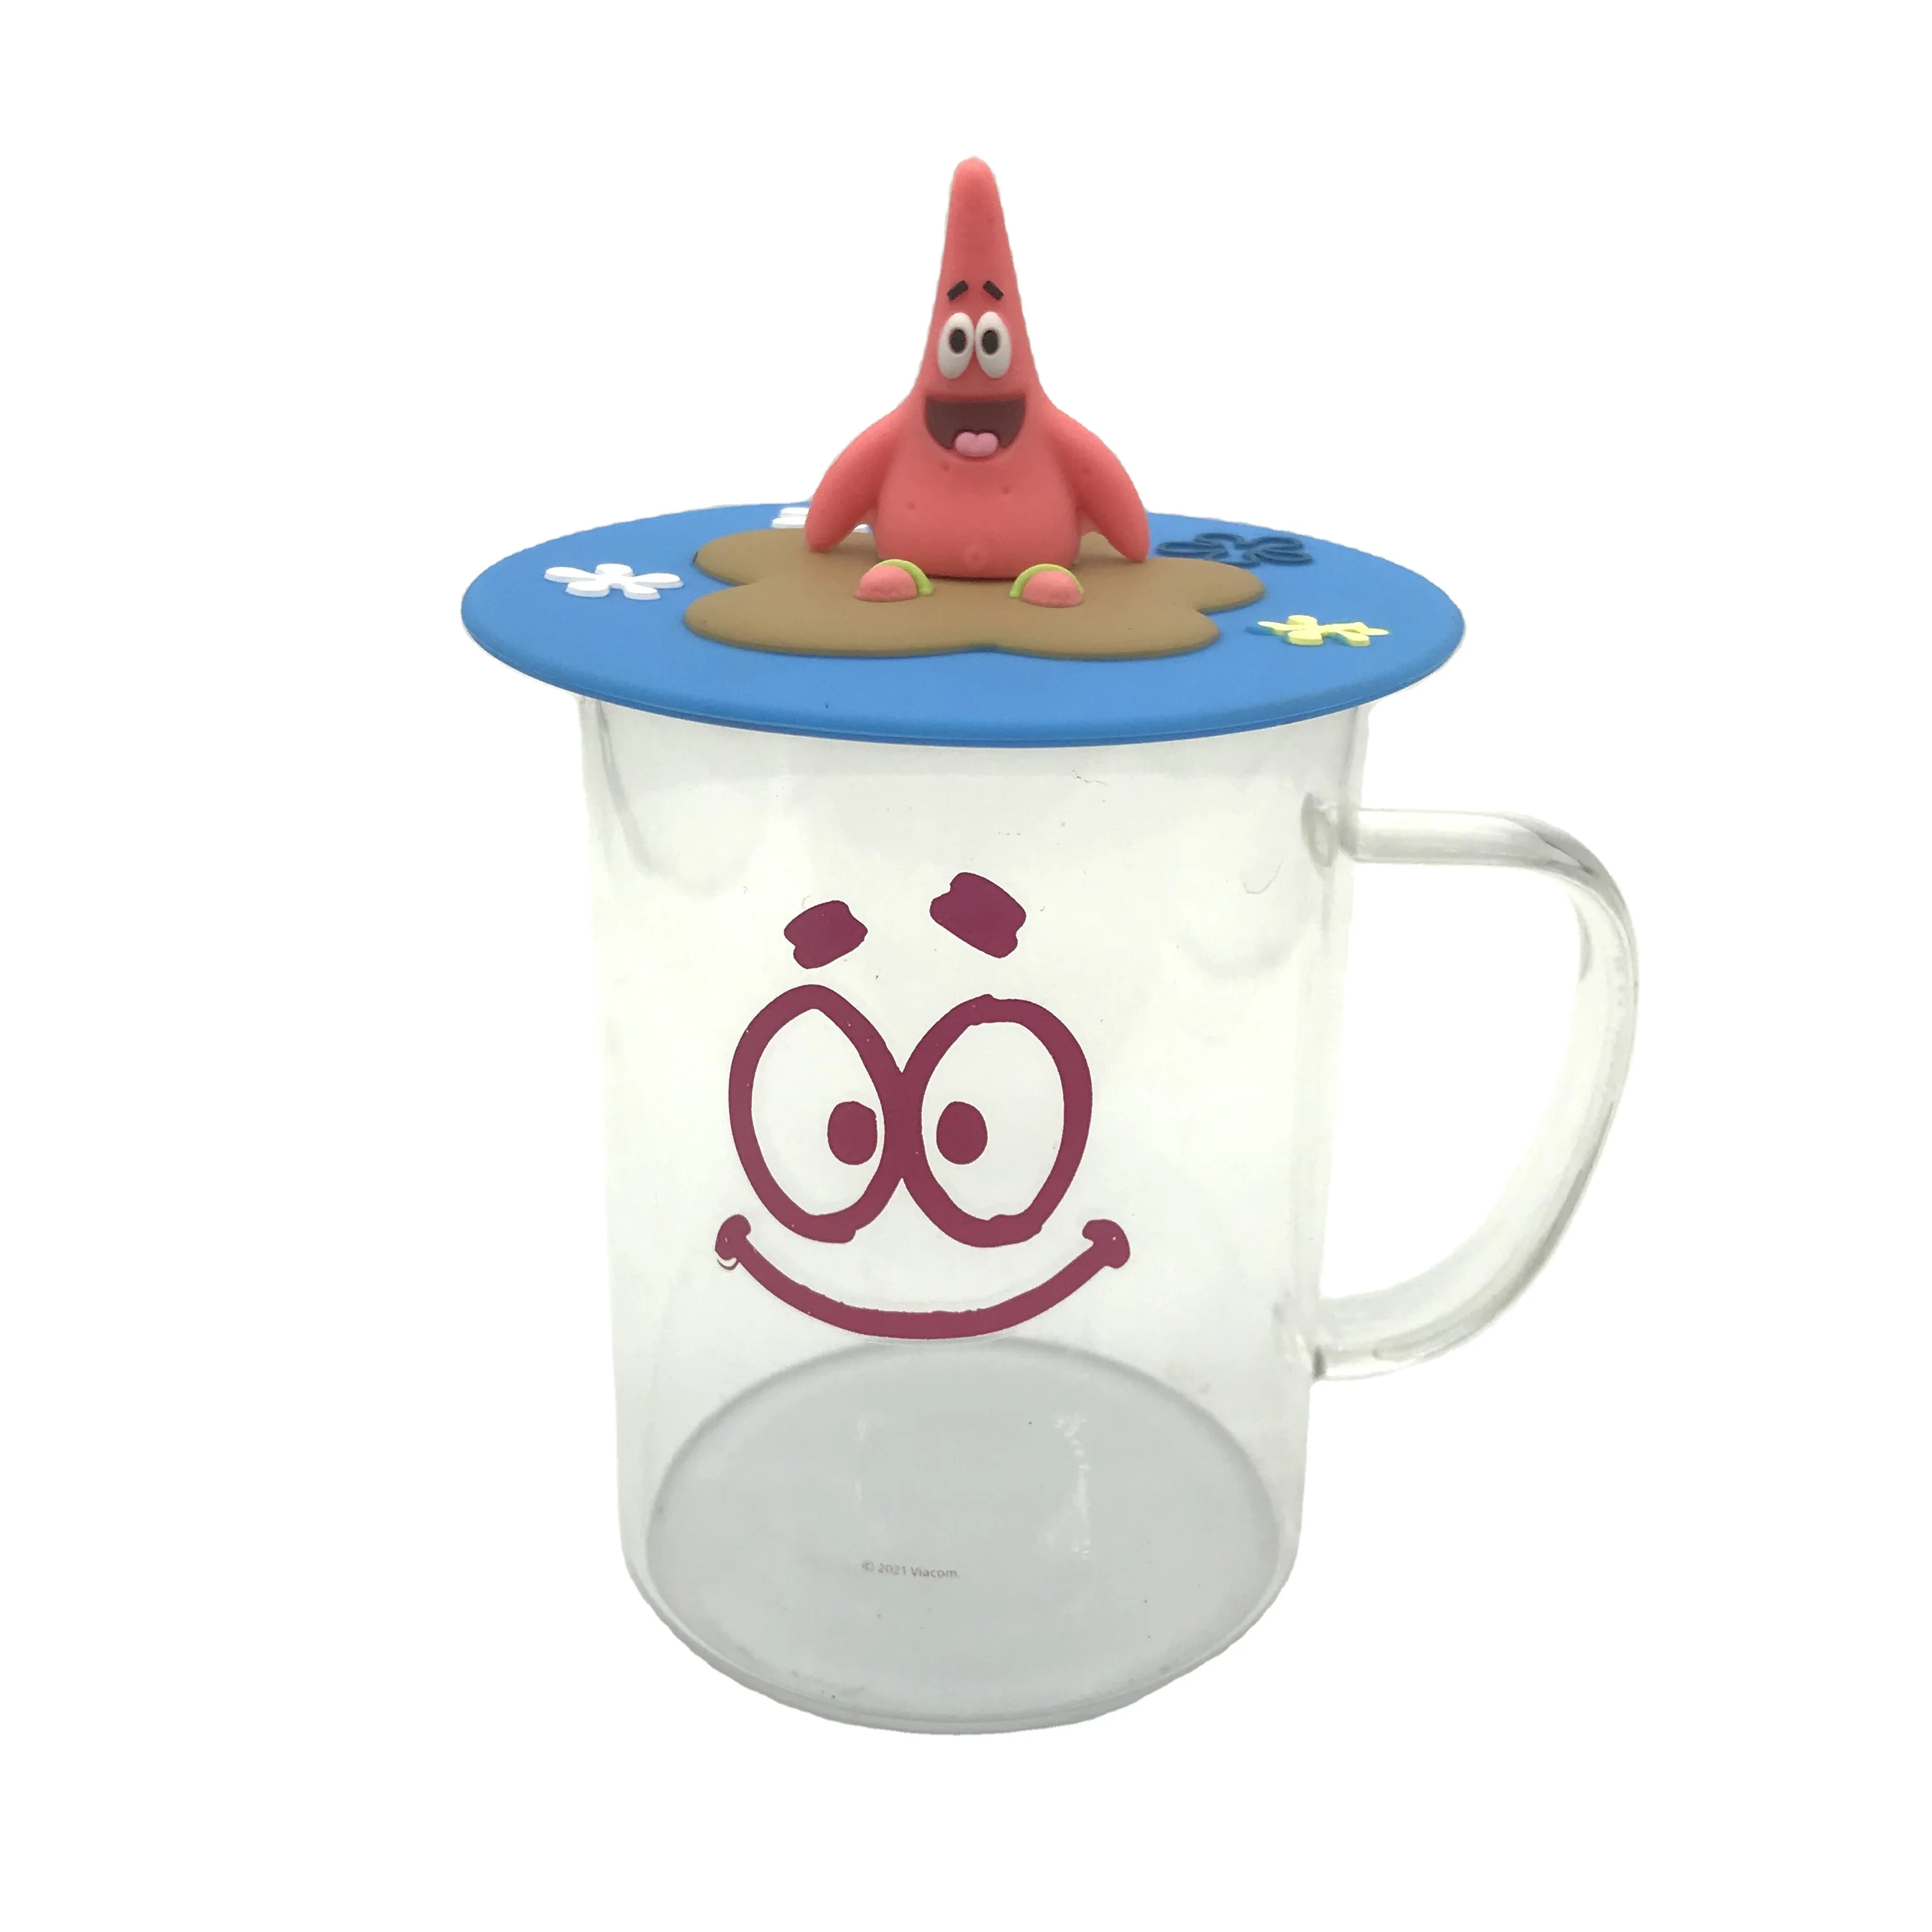 High Quality Cartoon Character Mug Large Capacity Cute Big Star Smiley Mug  With Lid - Buy Cartoon Mugs,Cute Mug,Large Mug With Lid Product on  